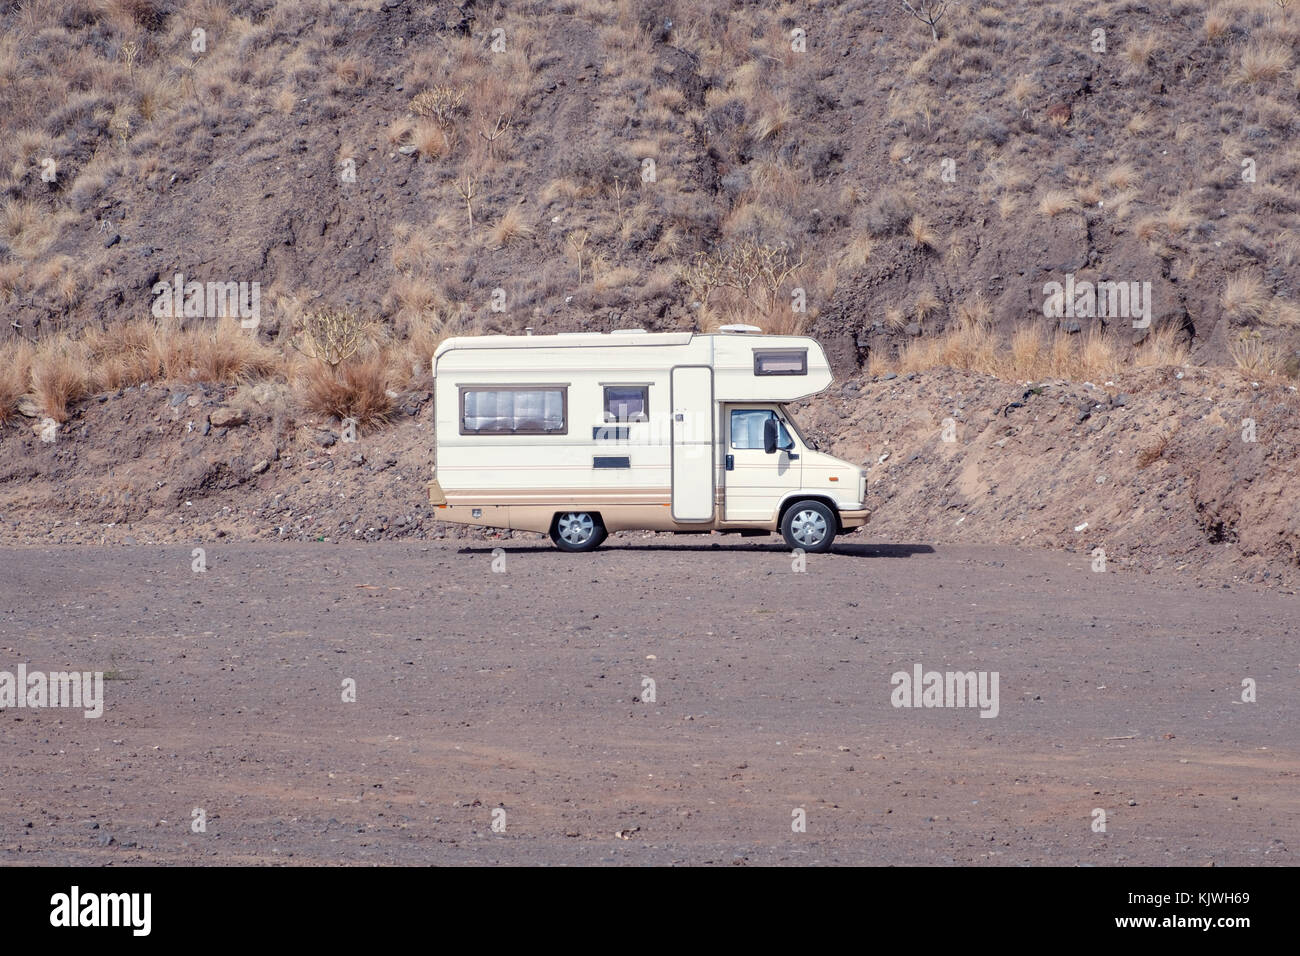 vintage camping bus, rv camper in desert landscape, Stock Photo